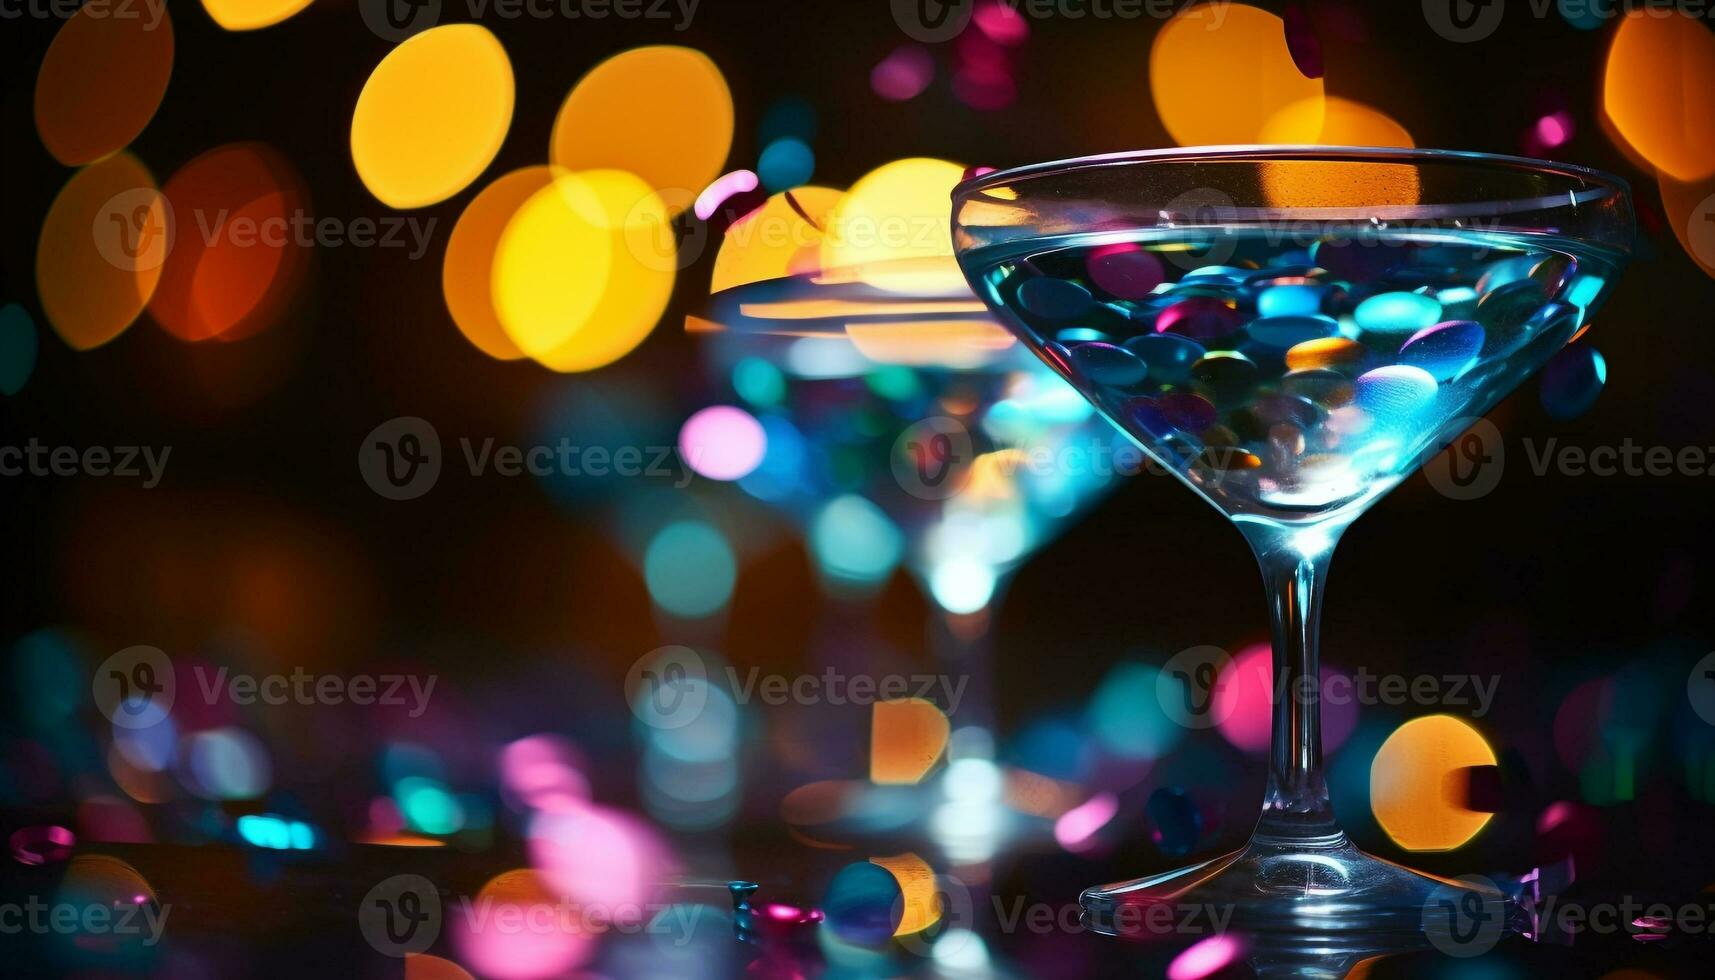 AI generated Nightclub celebration, martini glass illuminated with vibrant colors generated by AI photo